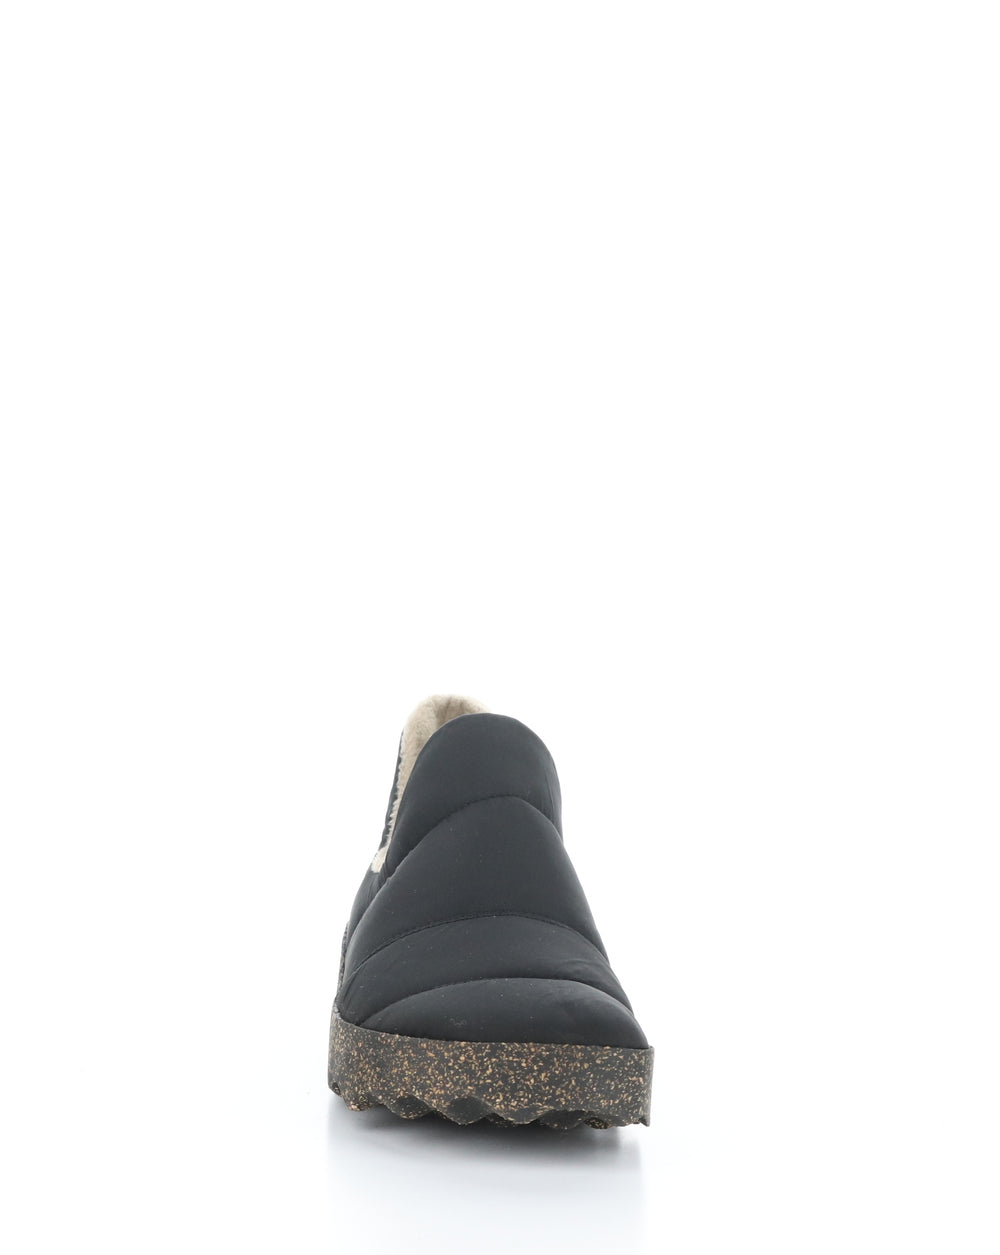 CRUS145ASP Black Round Toe Shoes